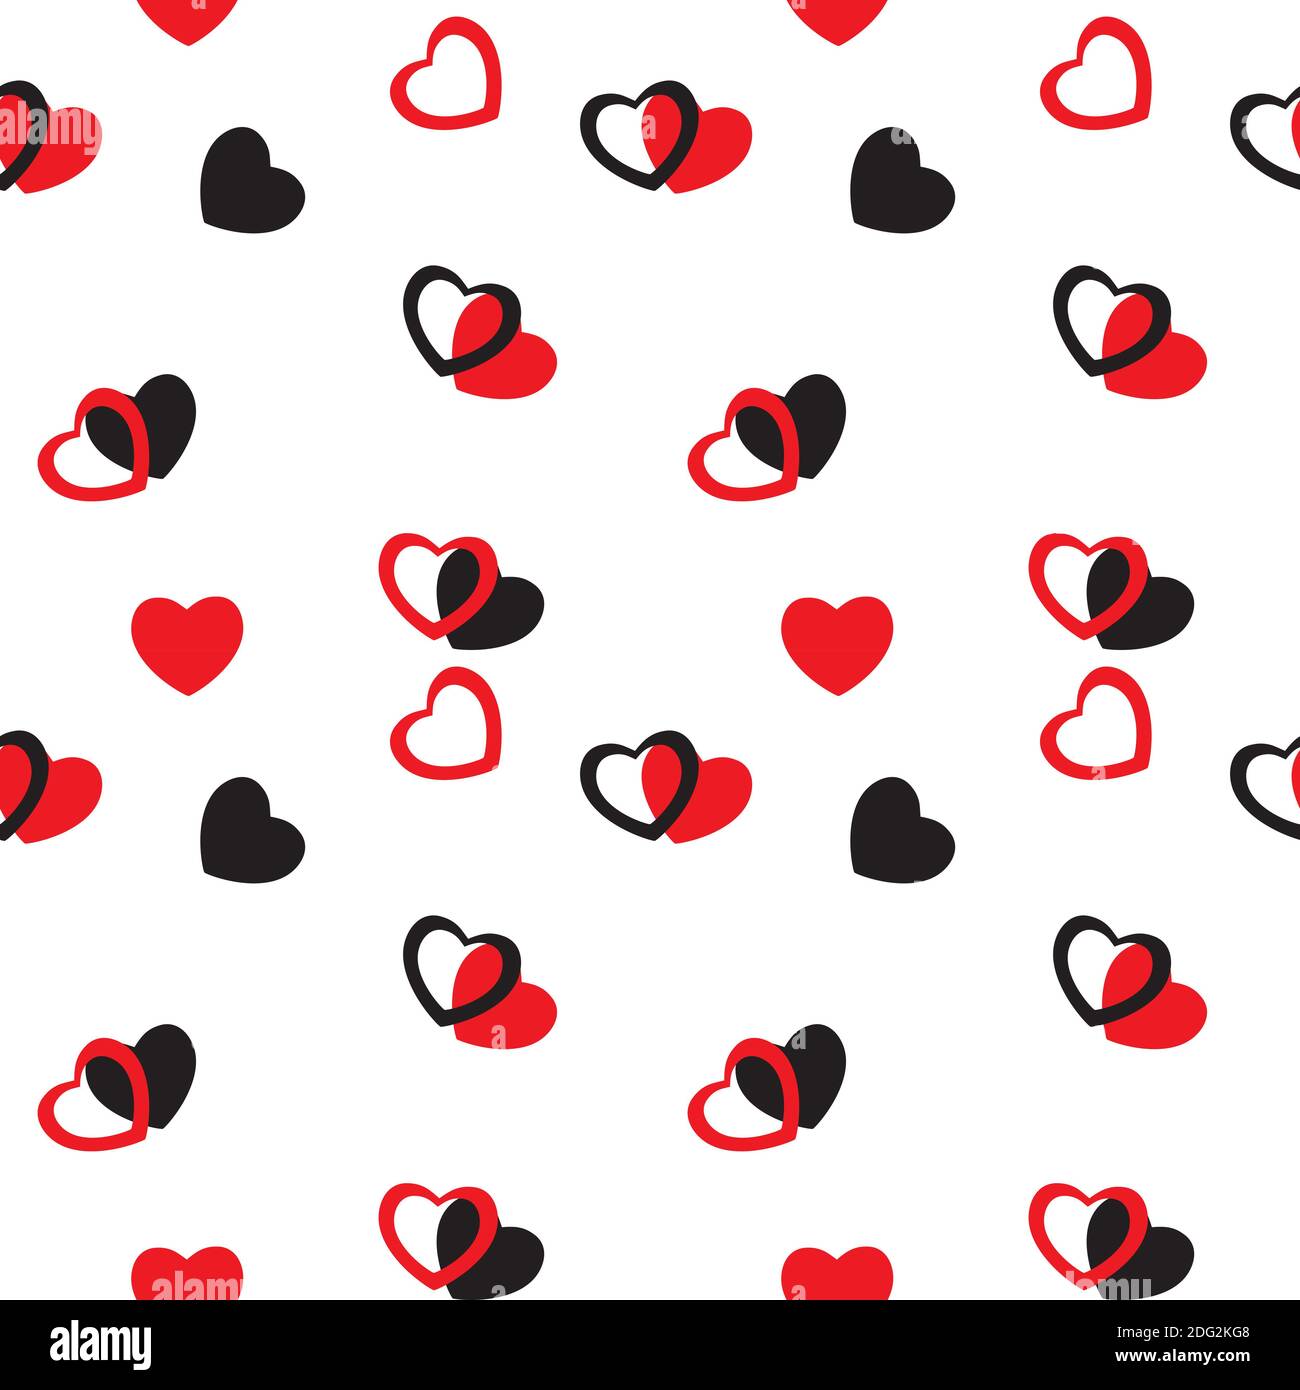 Heart love seamless pattern background. illustration Stock Photo